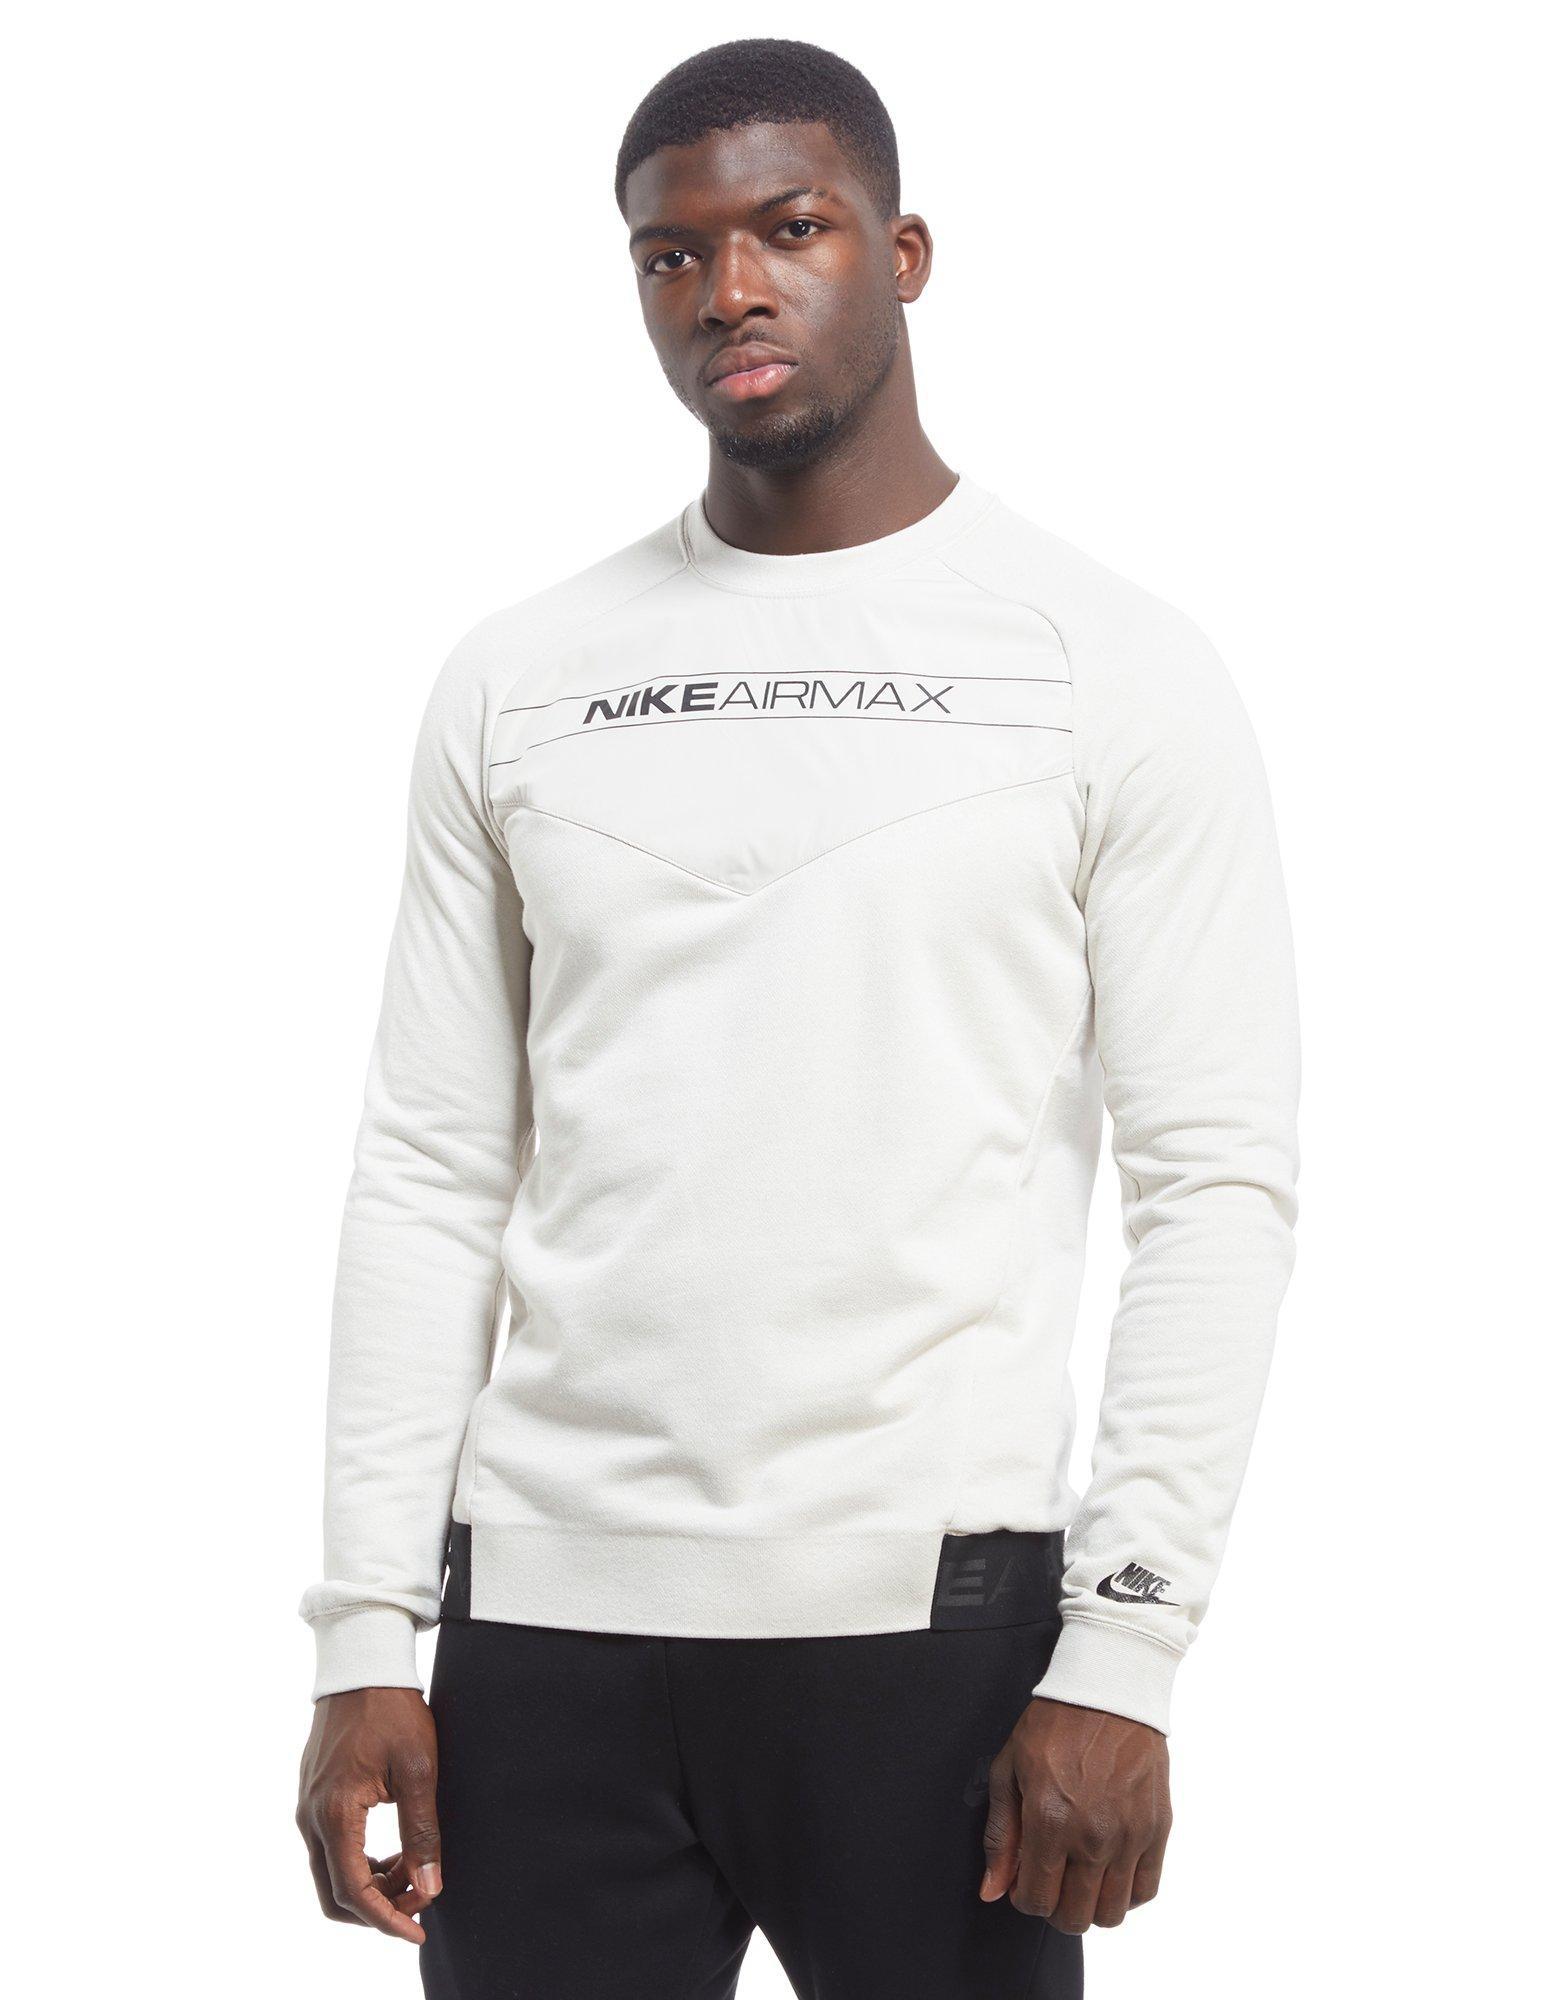 Nike Cotton Air Max Sweatshirt in White 